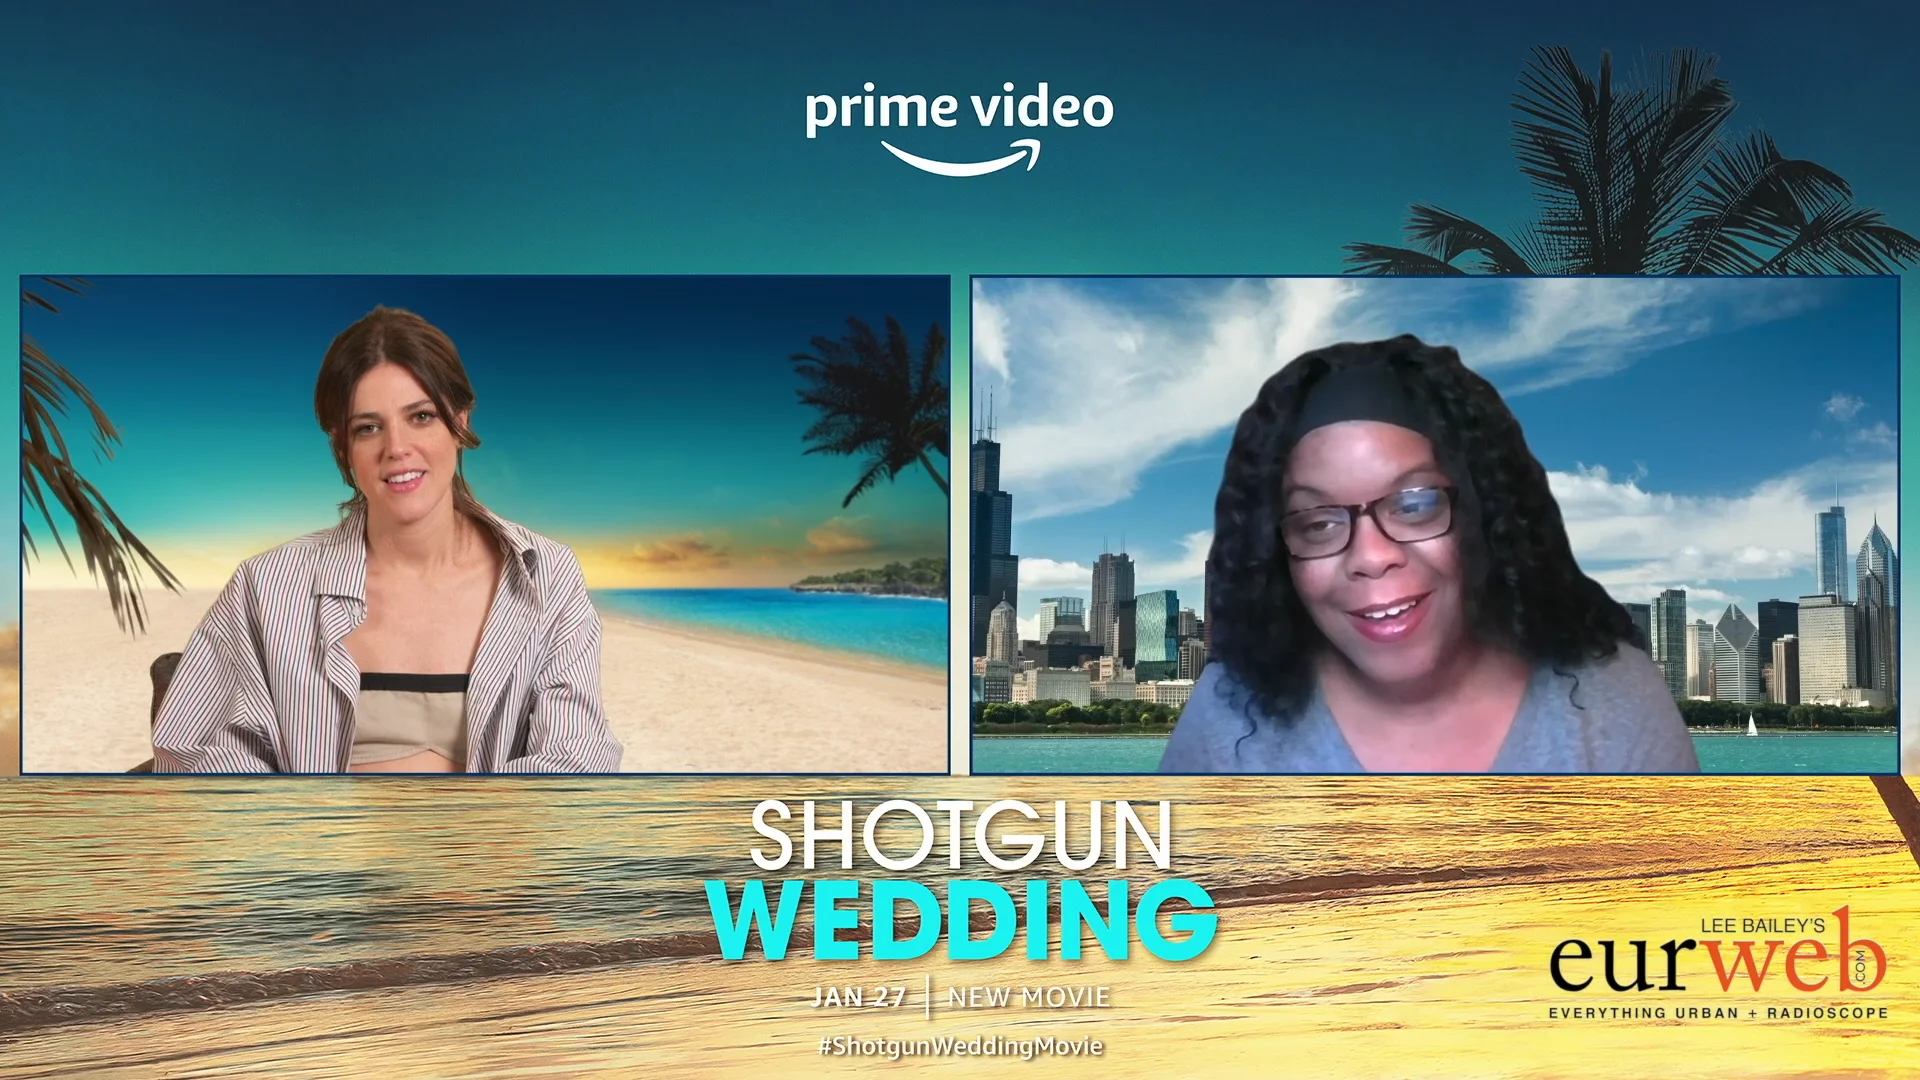 How to watch 'Shotgun Wedding' on Prime Video